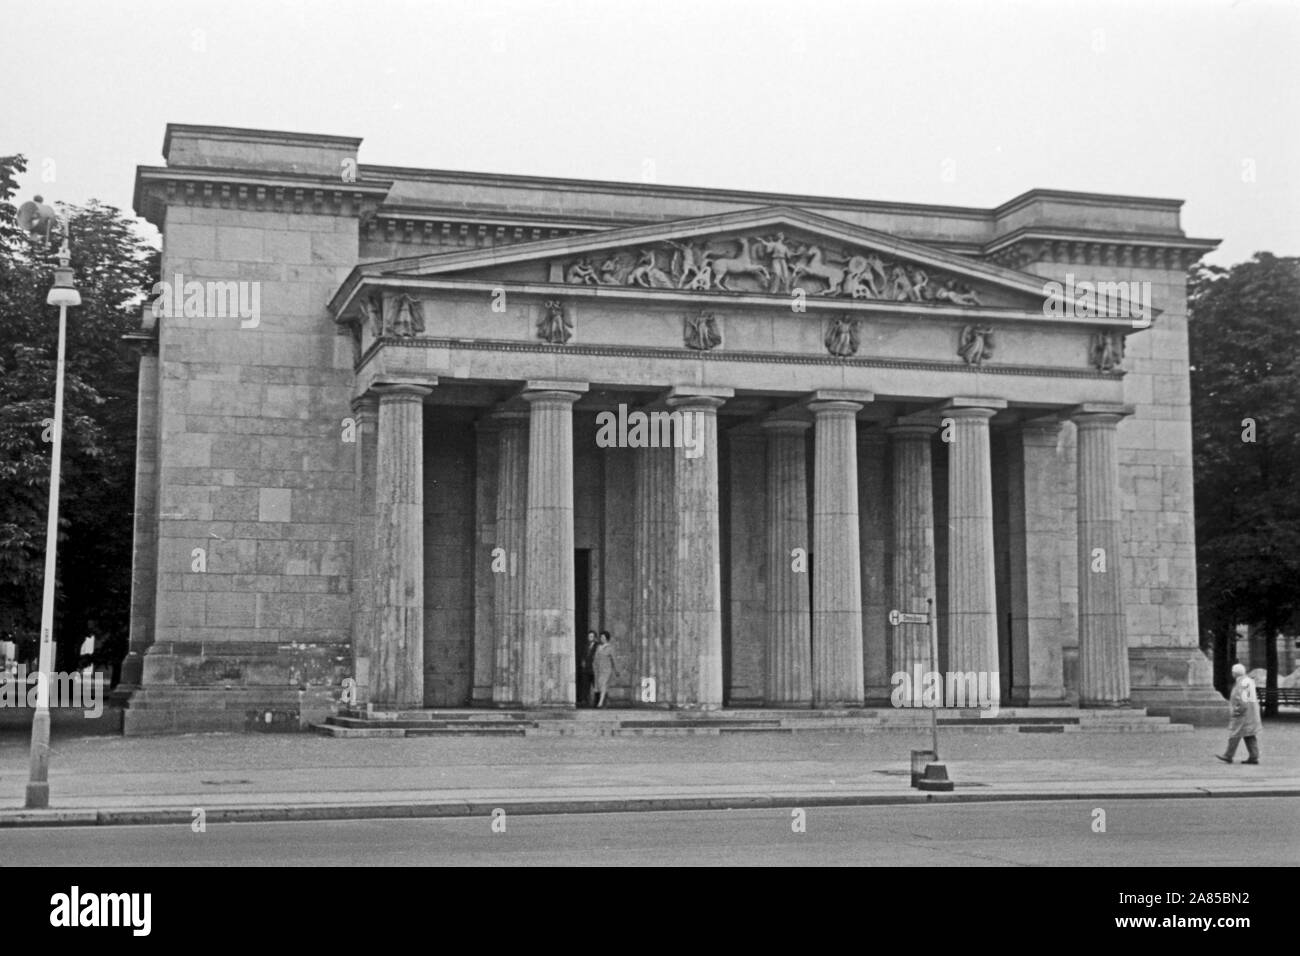 Neue Wache neben der Humboldt Universität di Berlino, Deutschland 1961. Nuova casa di guardia accanto alla Humboldt University di Berlino, Germania 1961. Foto Stock